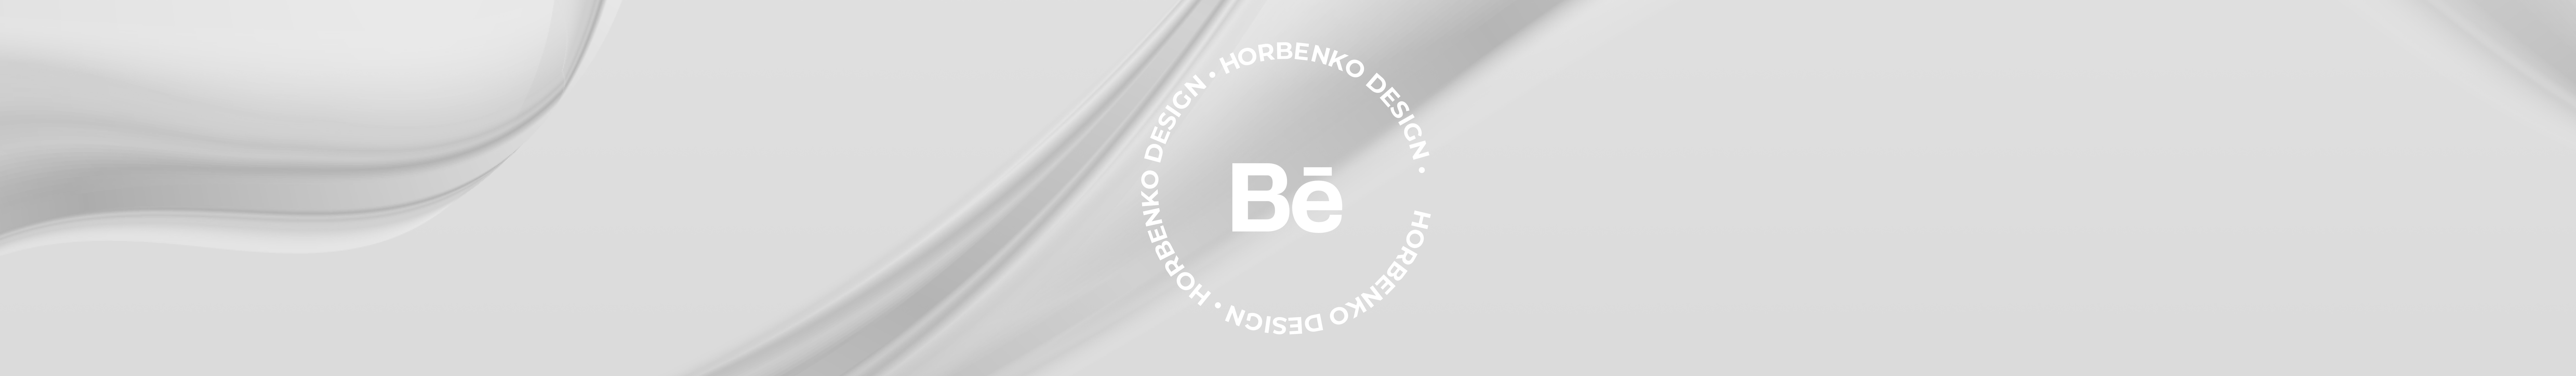 Sofiia Horbenko's profile banner